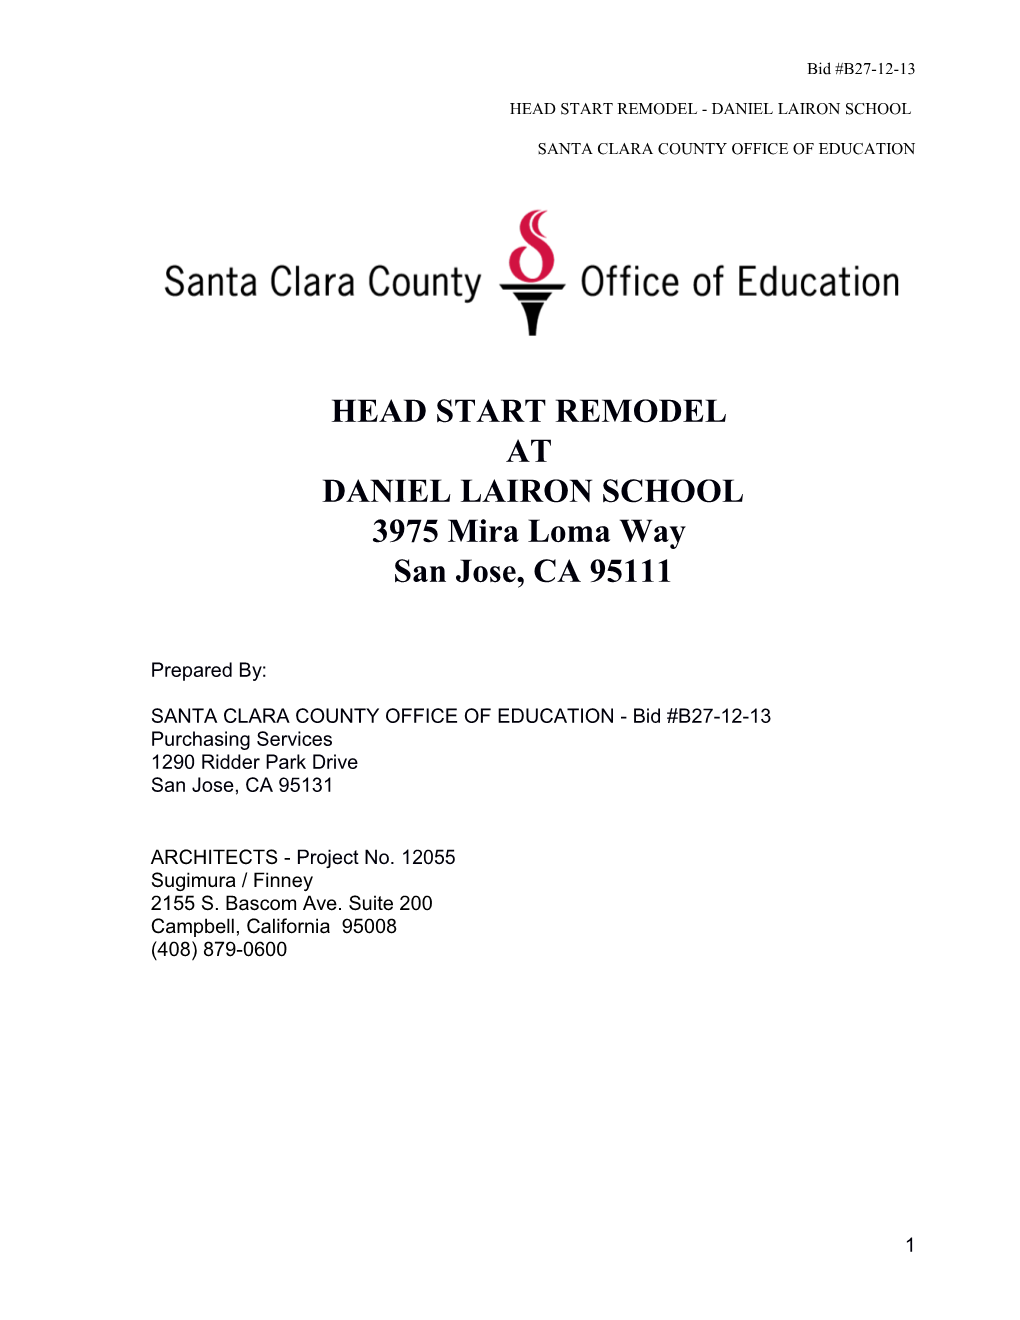 Head Start Remodel - Daniel Lairon School